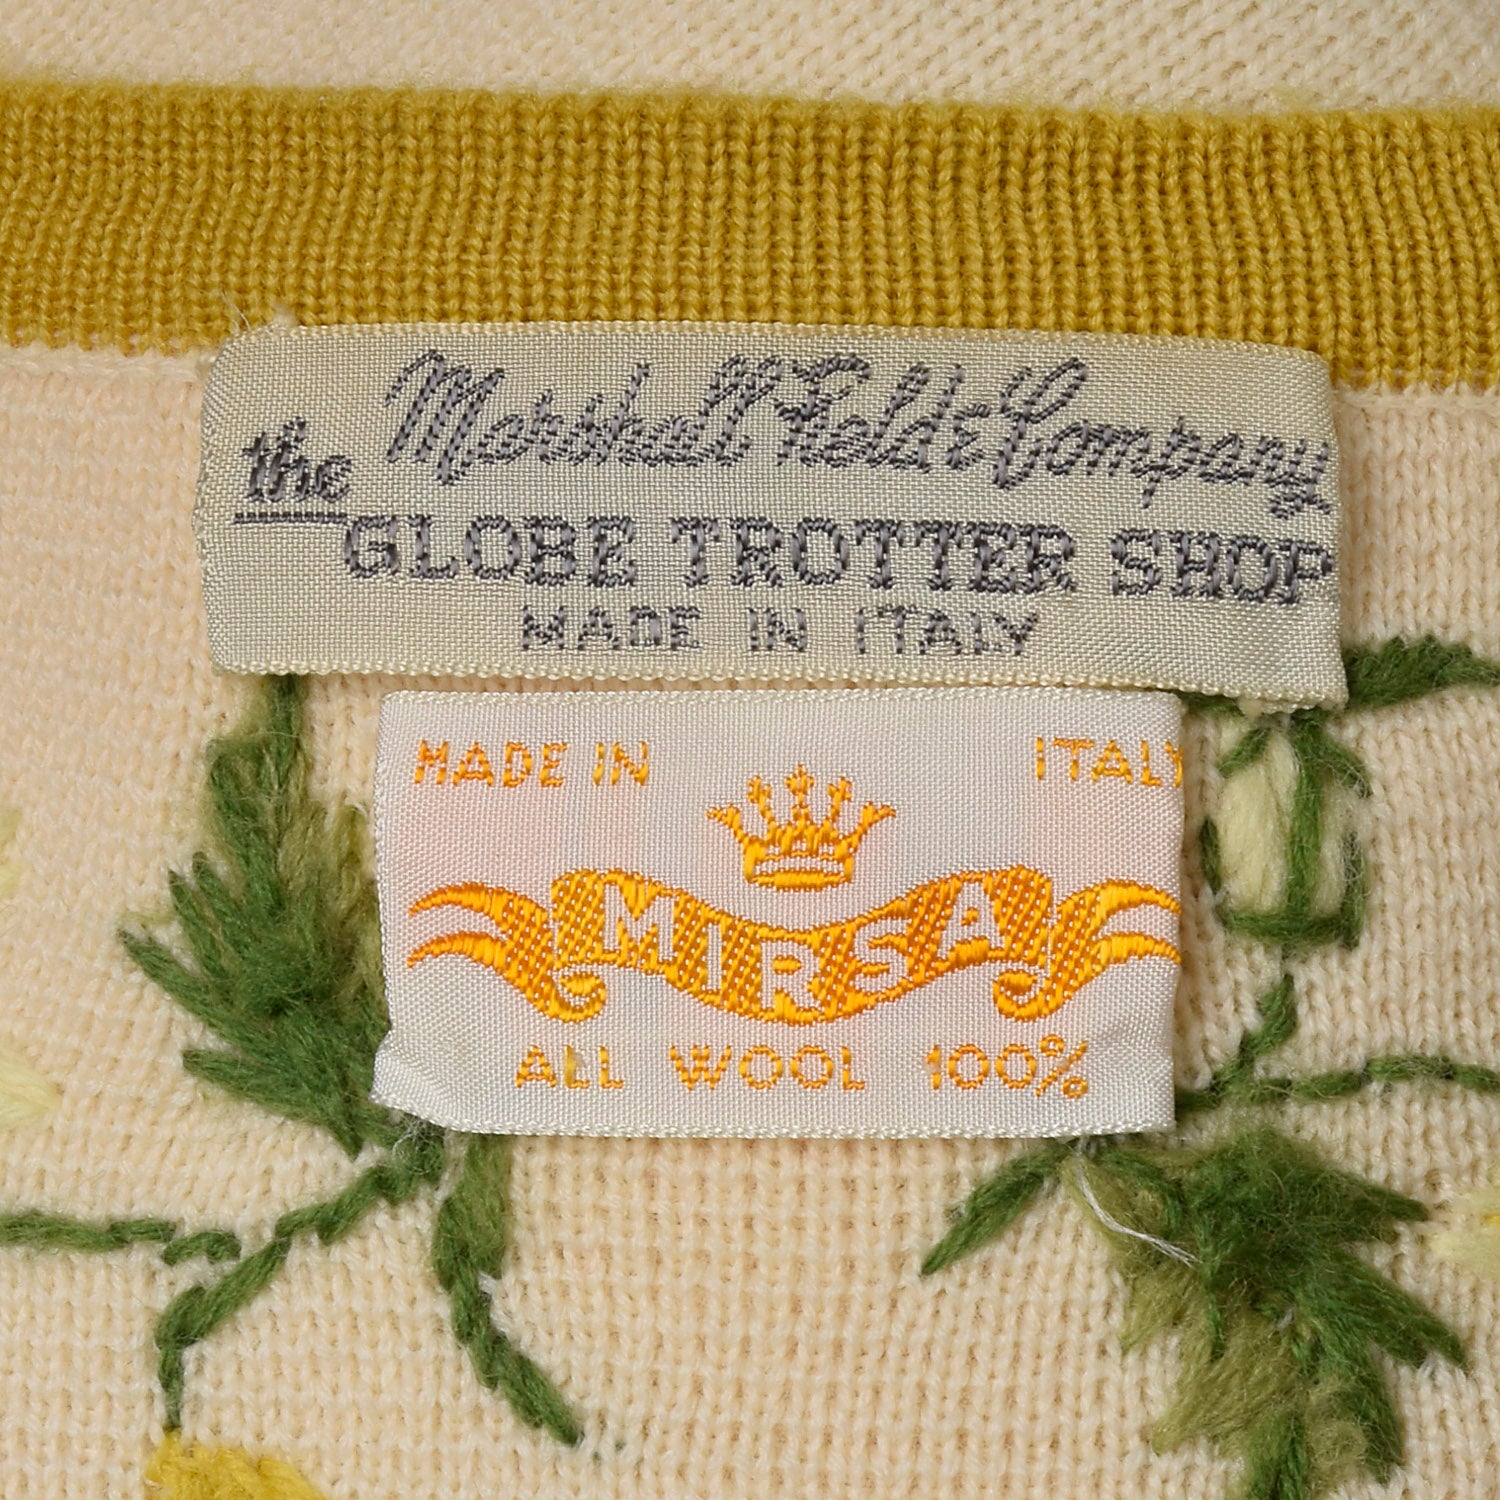 Medium 1960s Floral Embroidered Cardigan